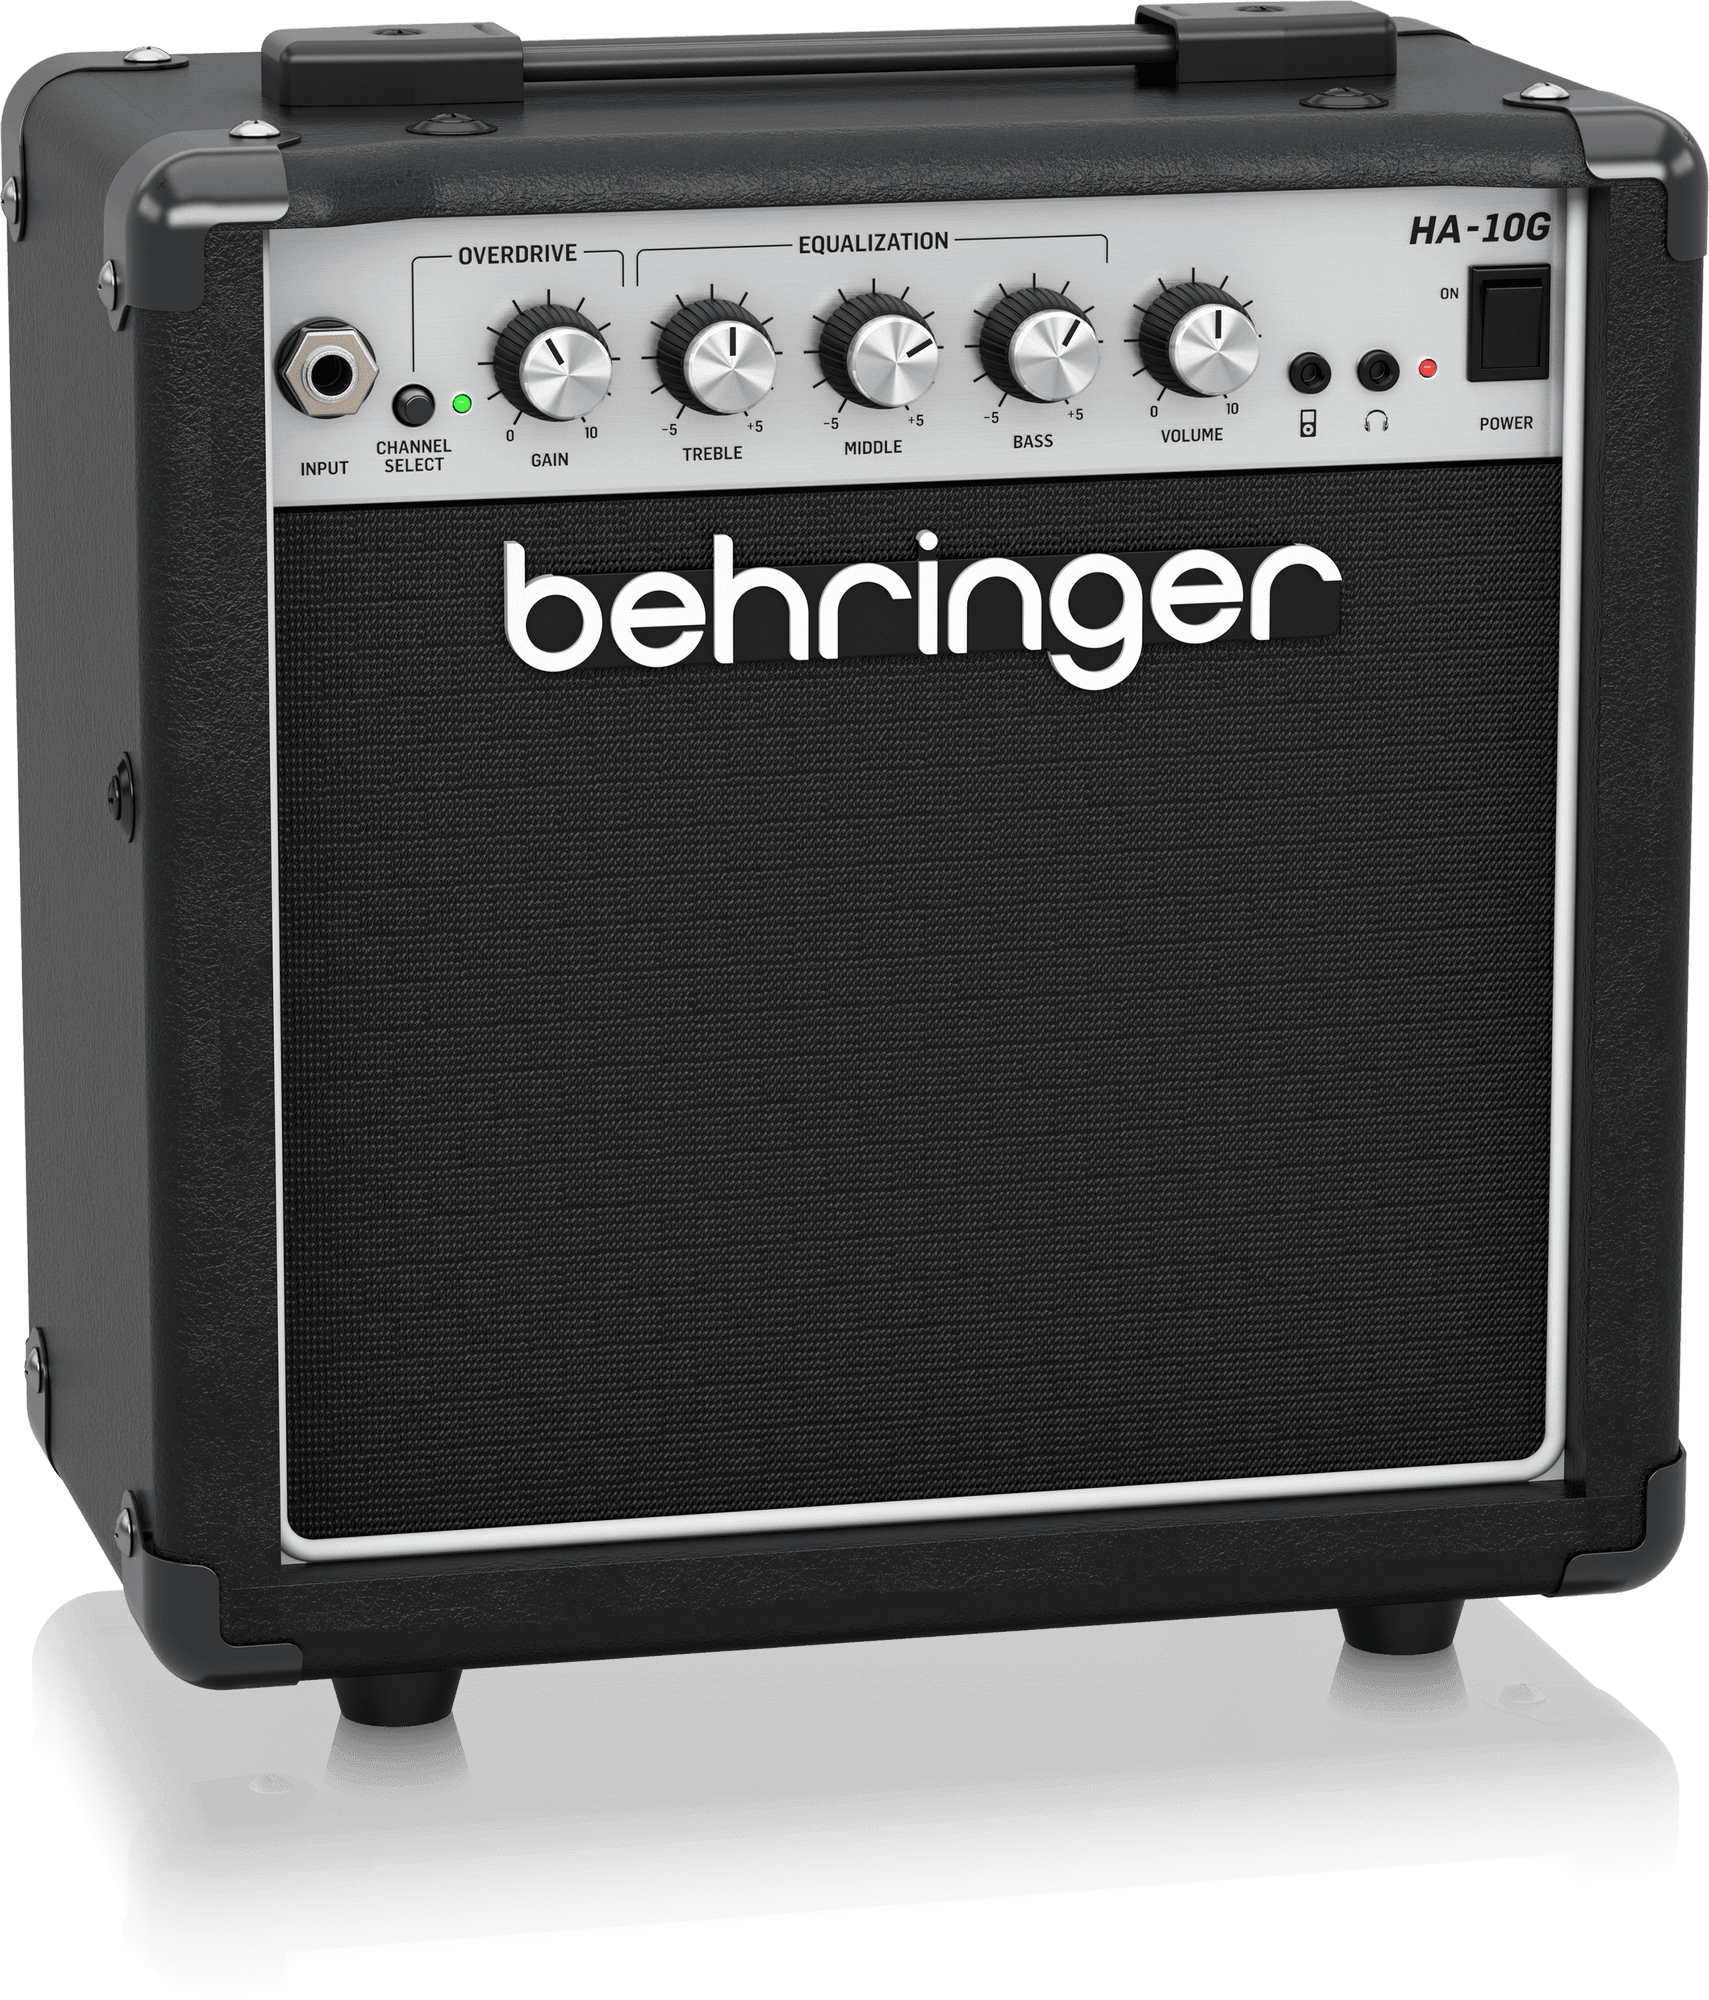 Behringer HA-10G 10 Watt Guitar Amplifier with 2 Independent Channels, VTC Tube Modeling and Original Bugera 6" Speaker | BEHRINGER , Zoso Music